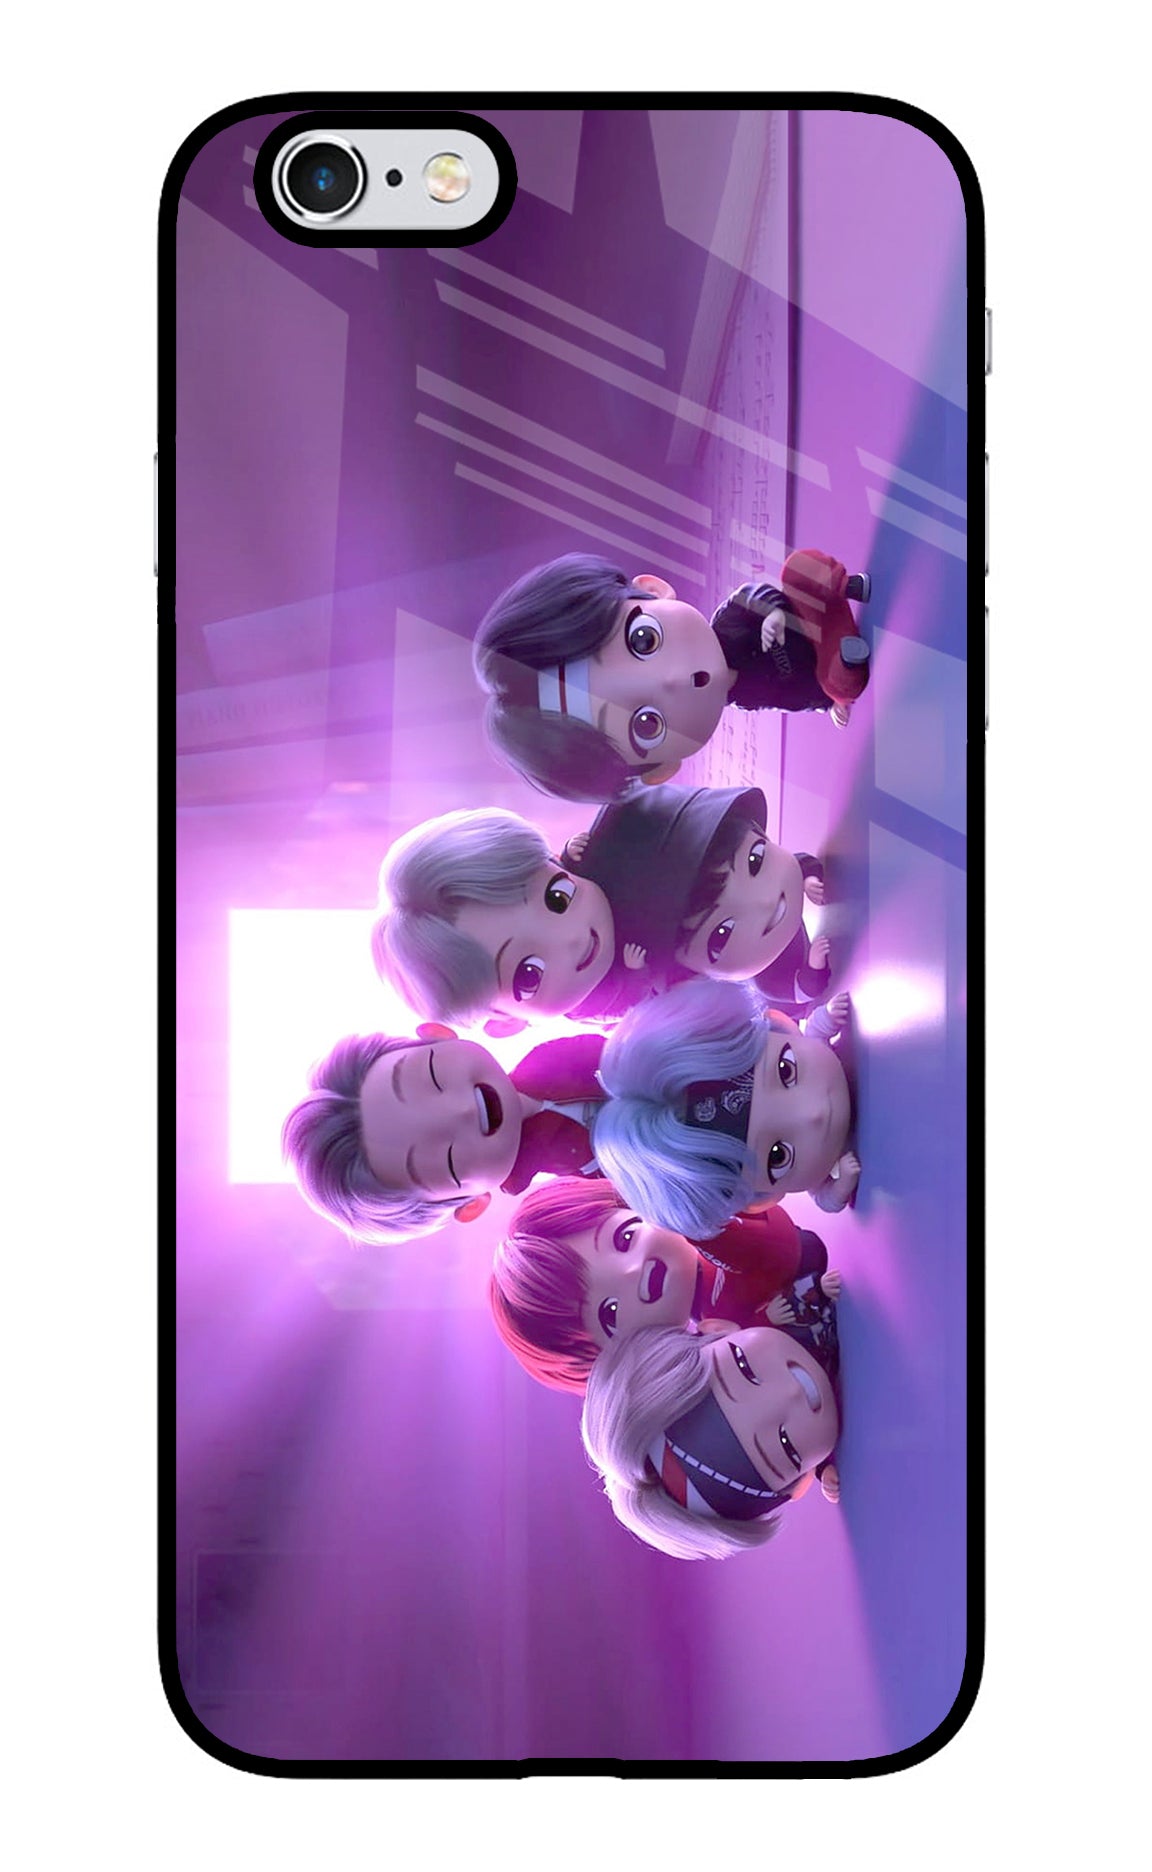 BTS Chibi iPhone 6/6s Glass Case